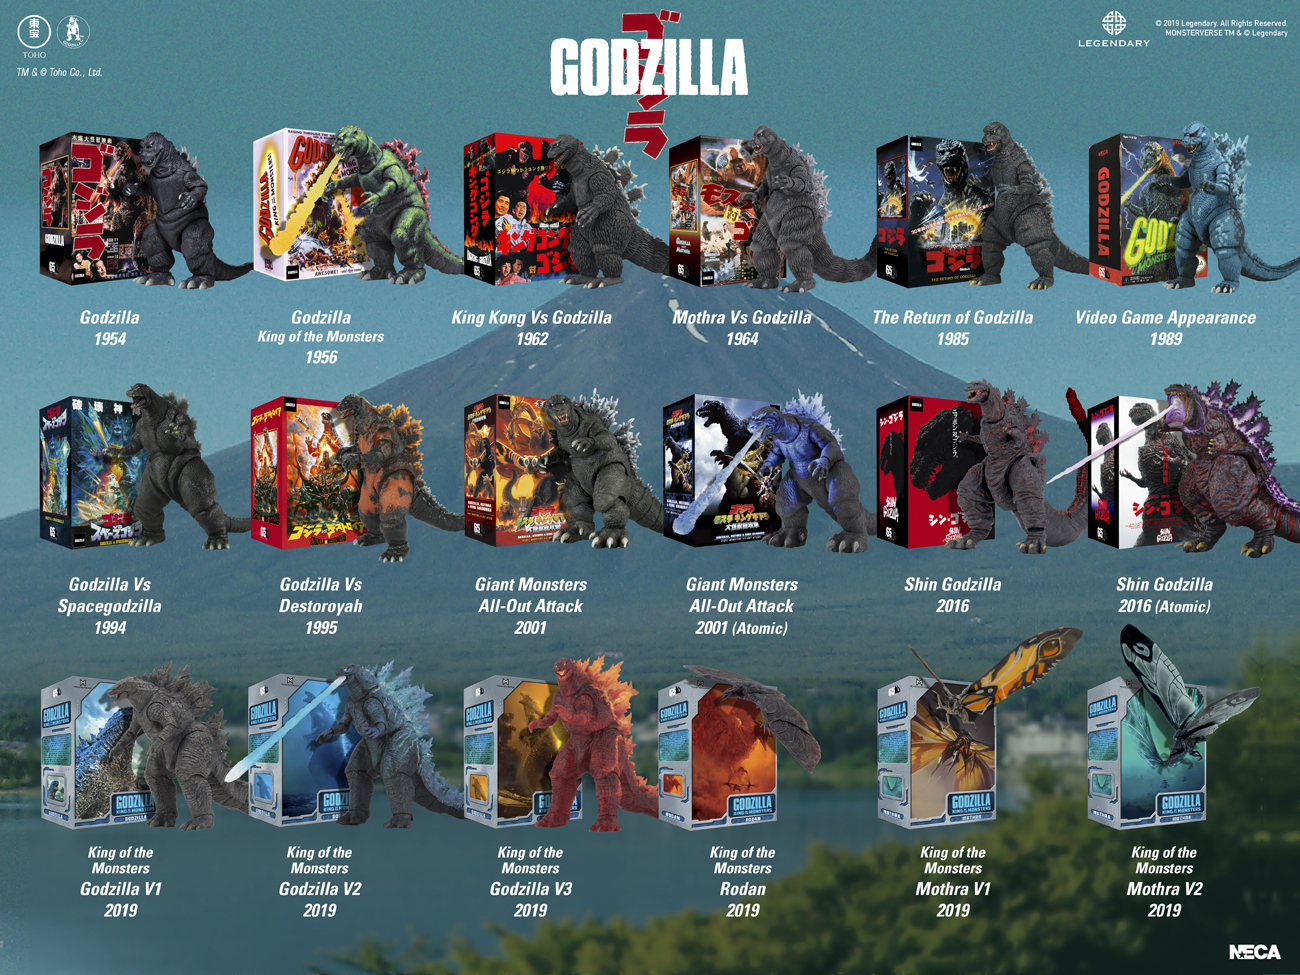 NECAOnline.com | 5 Days of Downloads 2019 – Bonus: Godzilla Action Figure Visual Guide